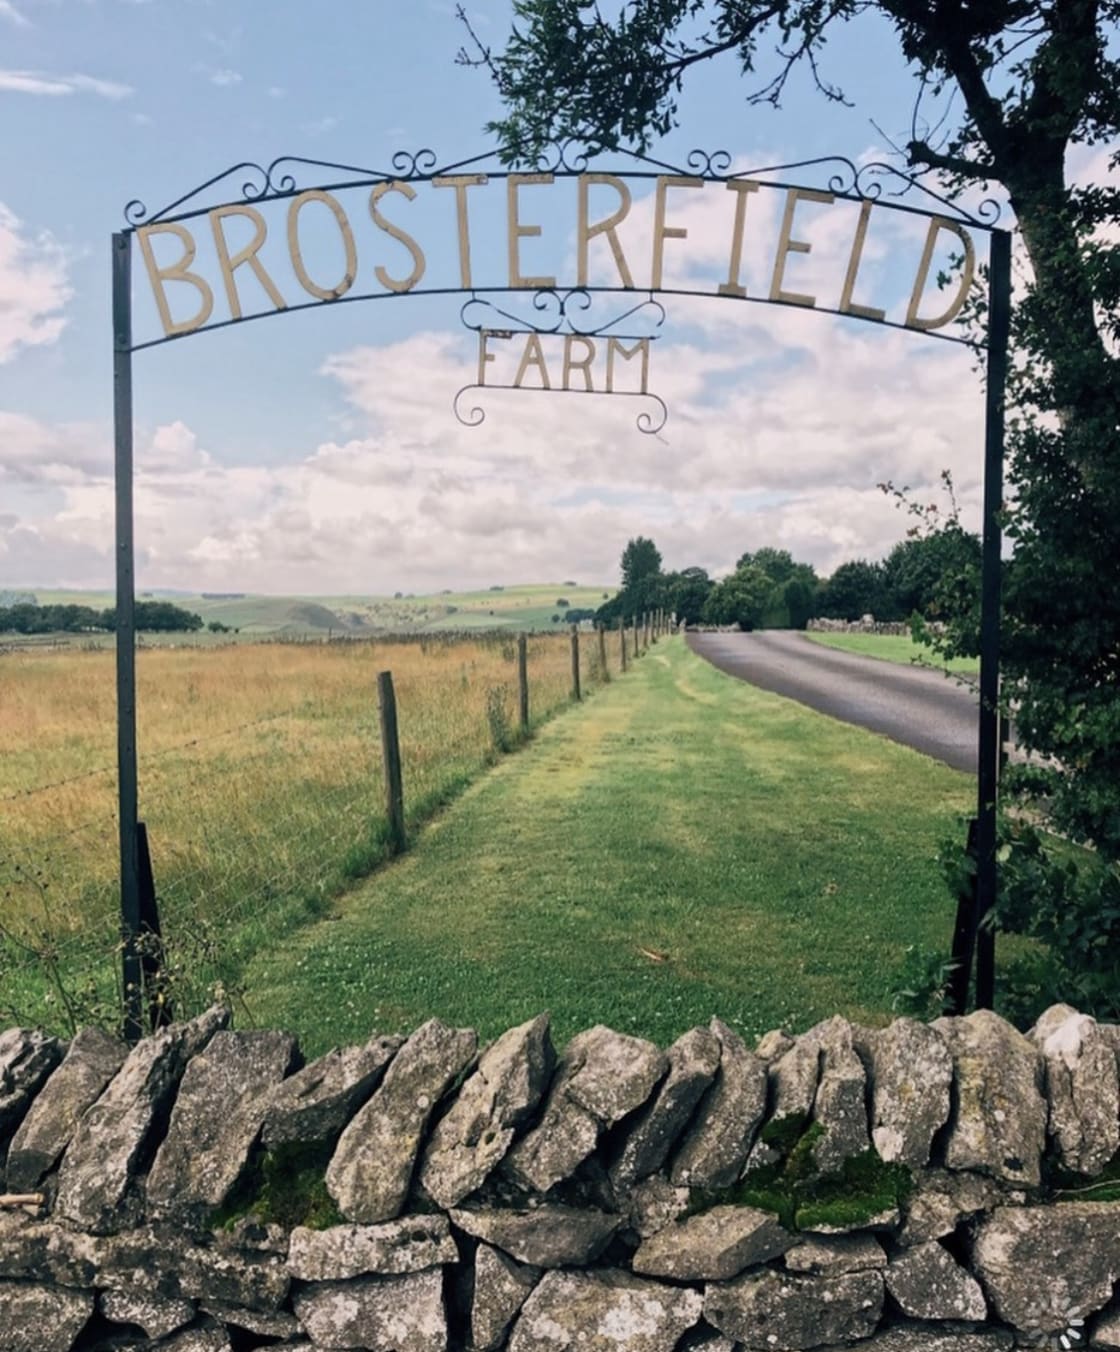 Brosterfield Farm